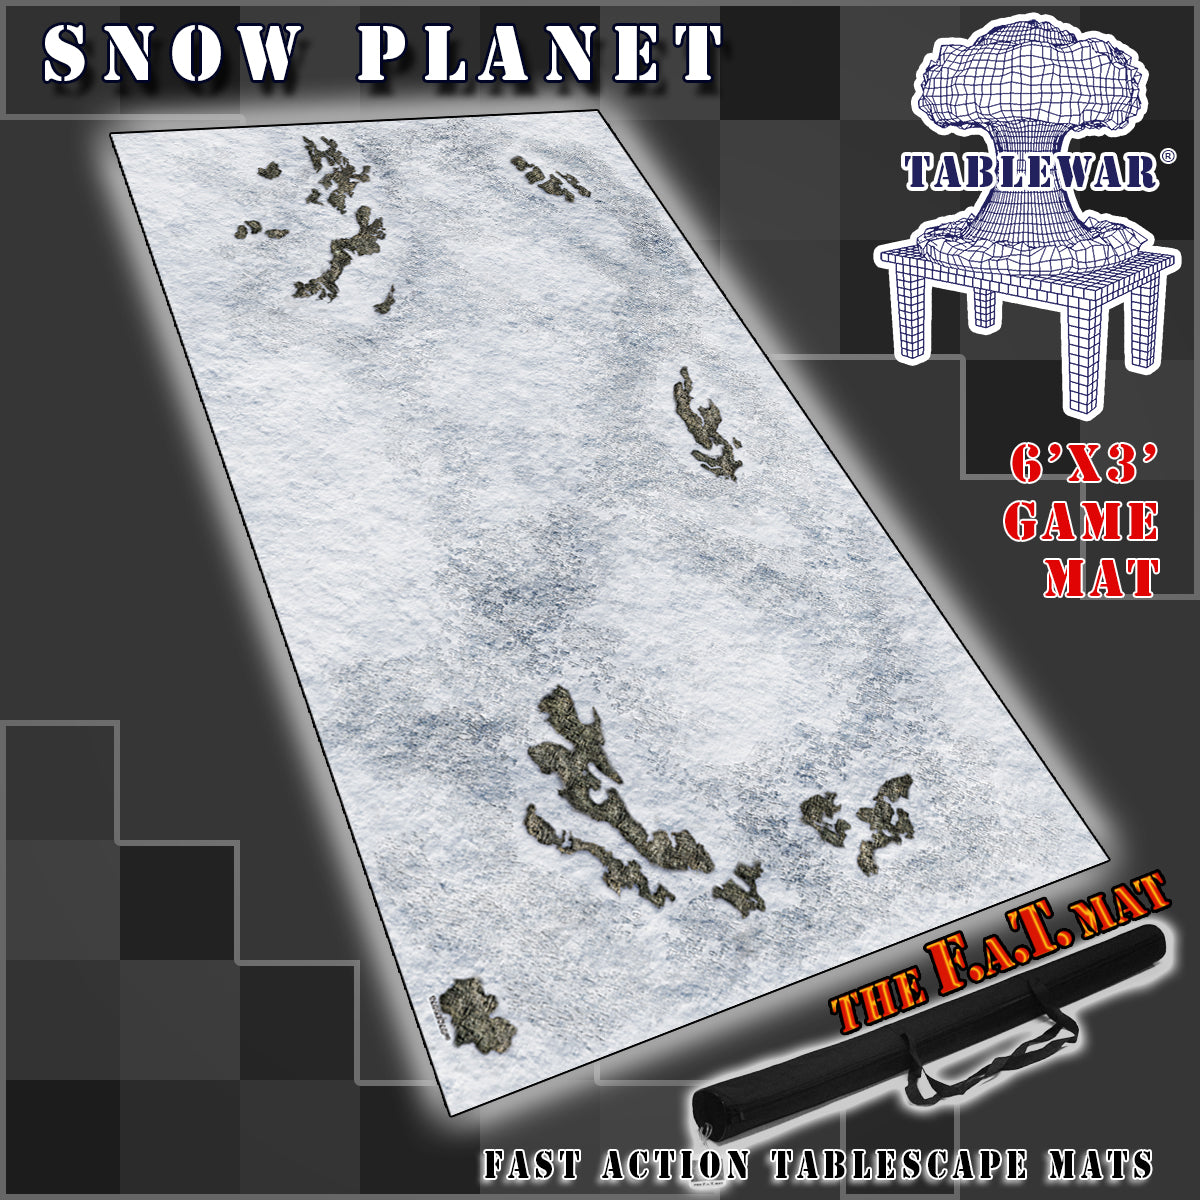 6x3 'Snow Planet' F.A.T. Mat Gaming Mat – TABLEWAR®